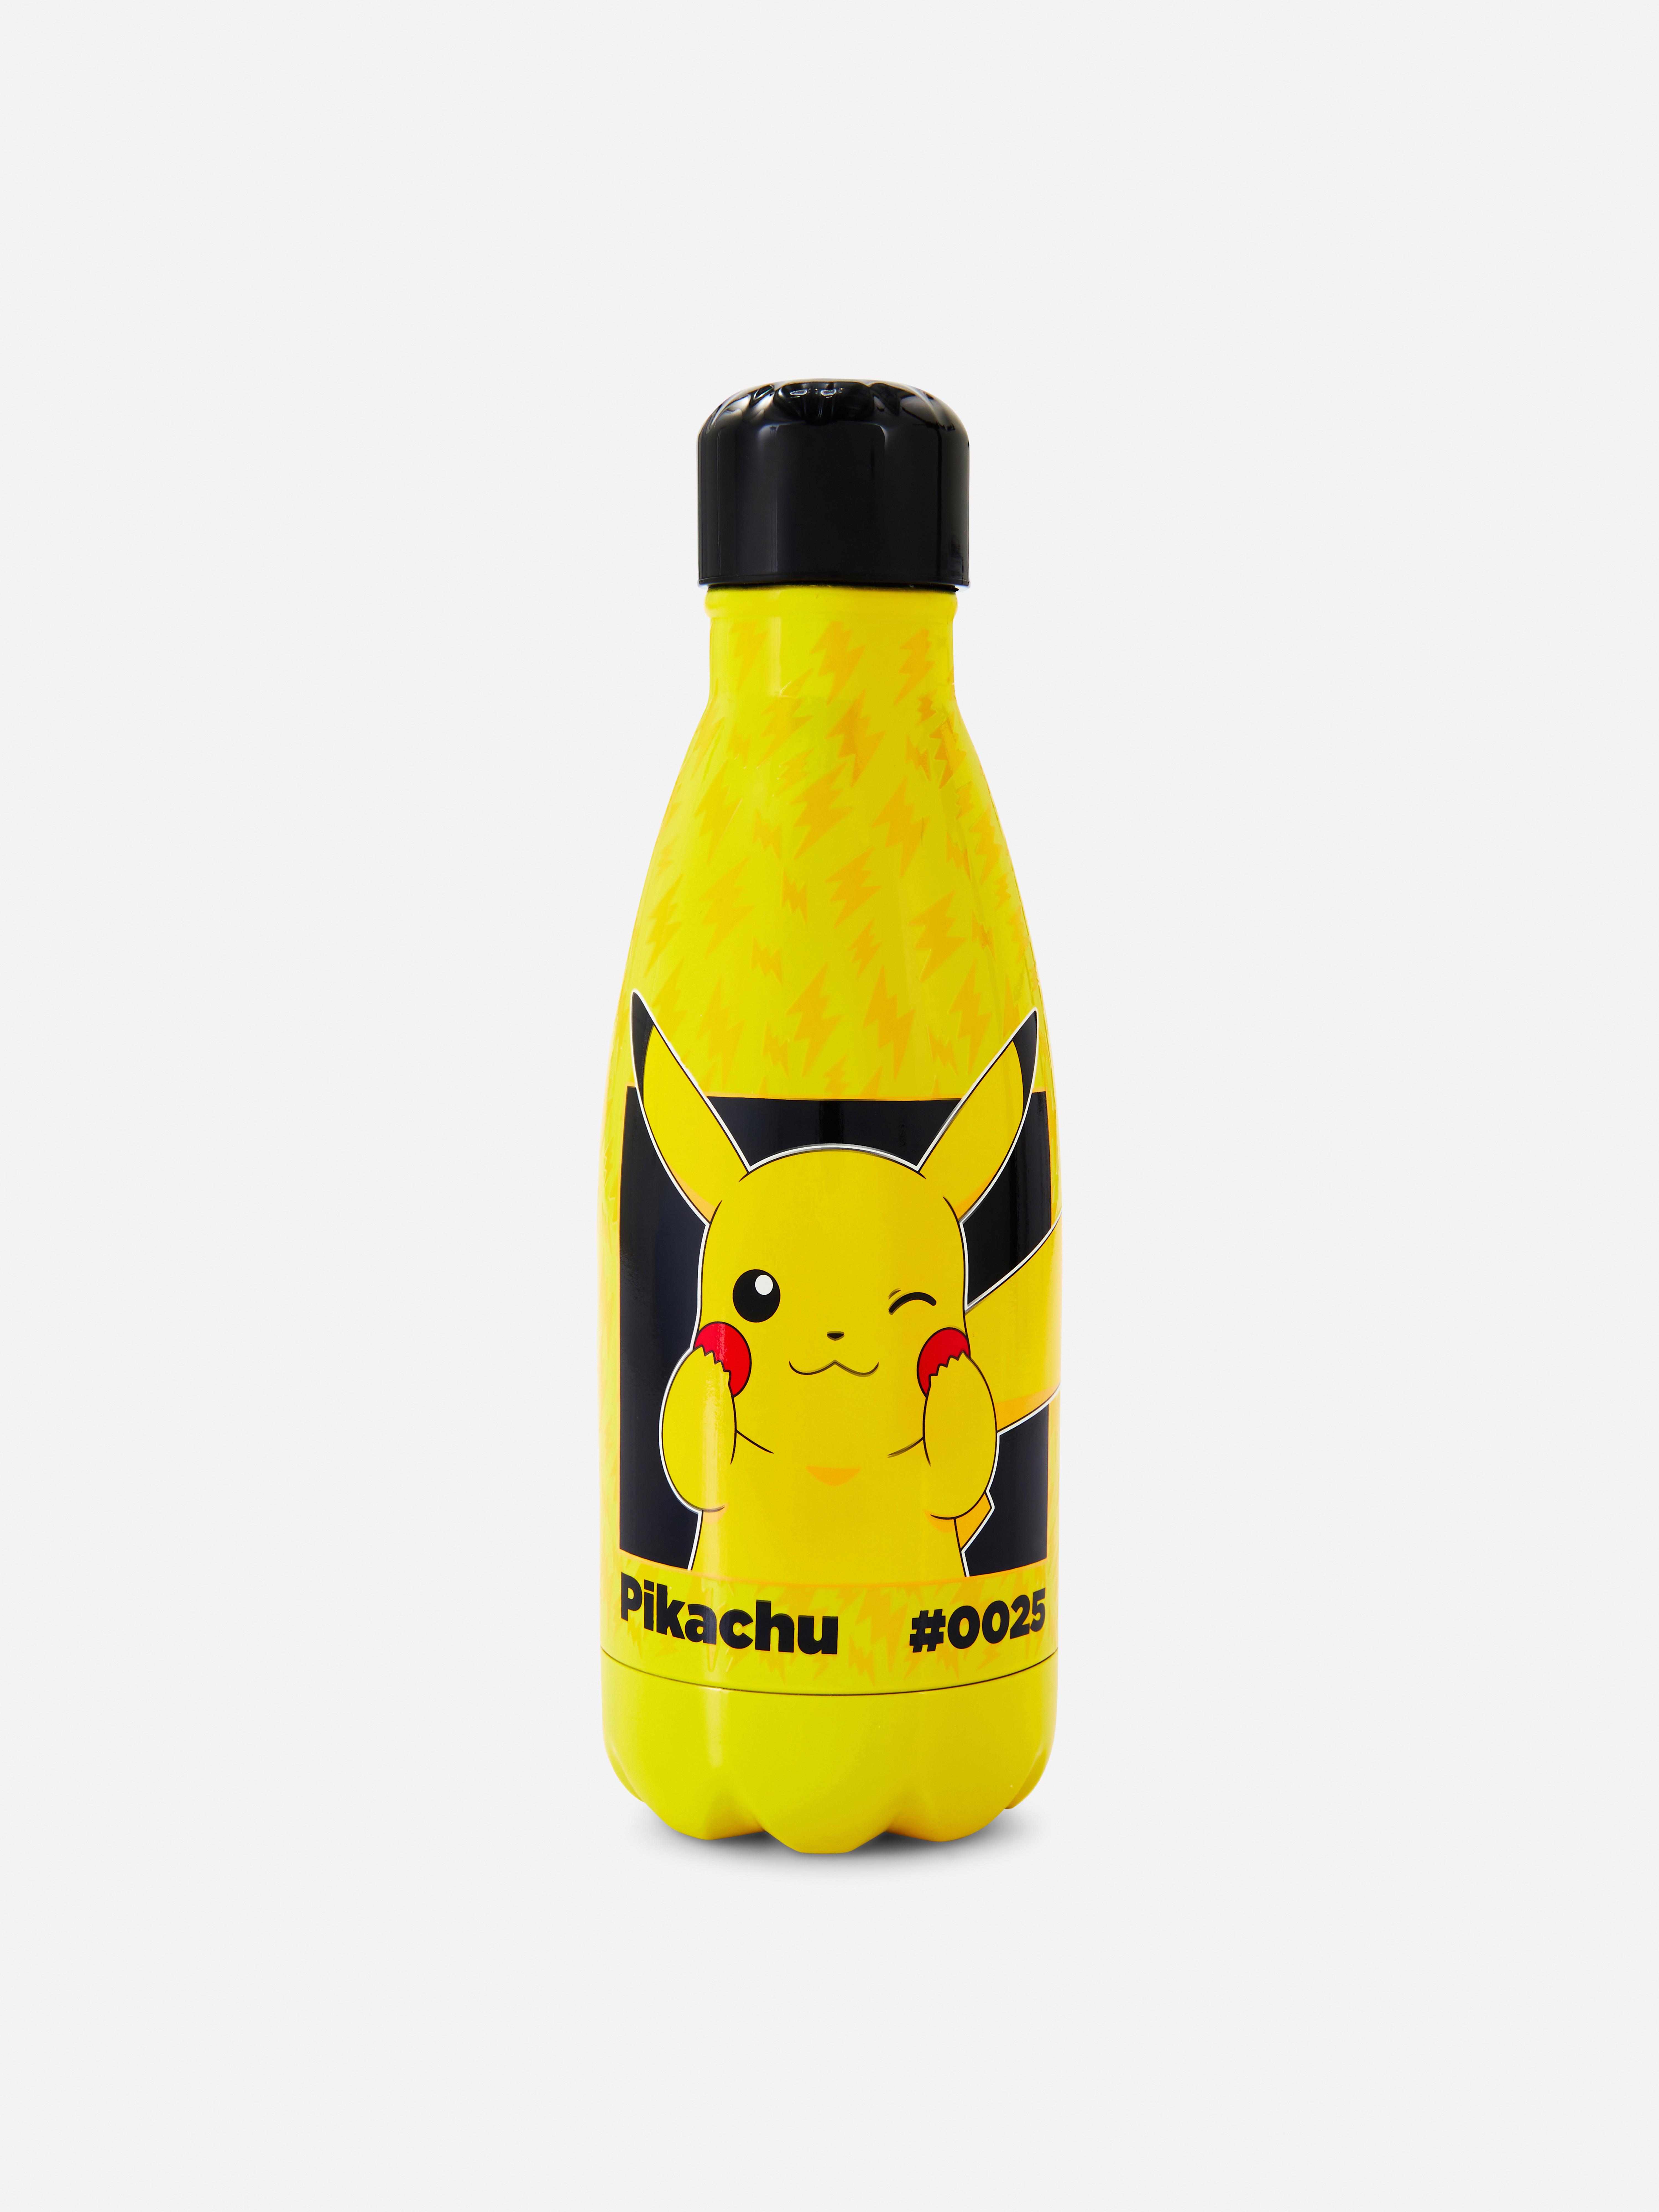 Pokémon Pikachu Water Bottle